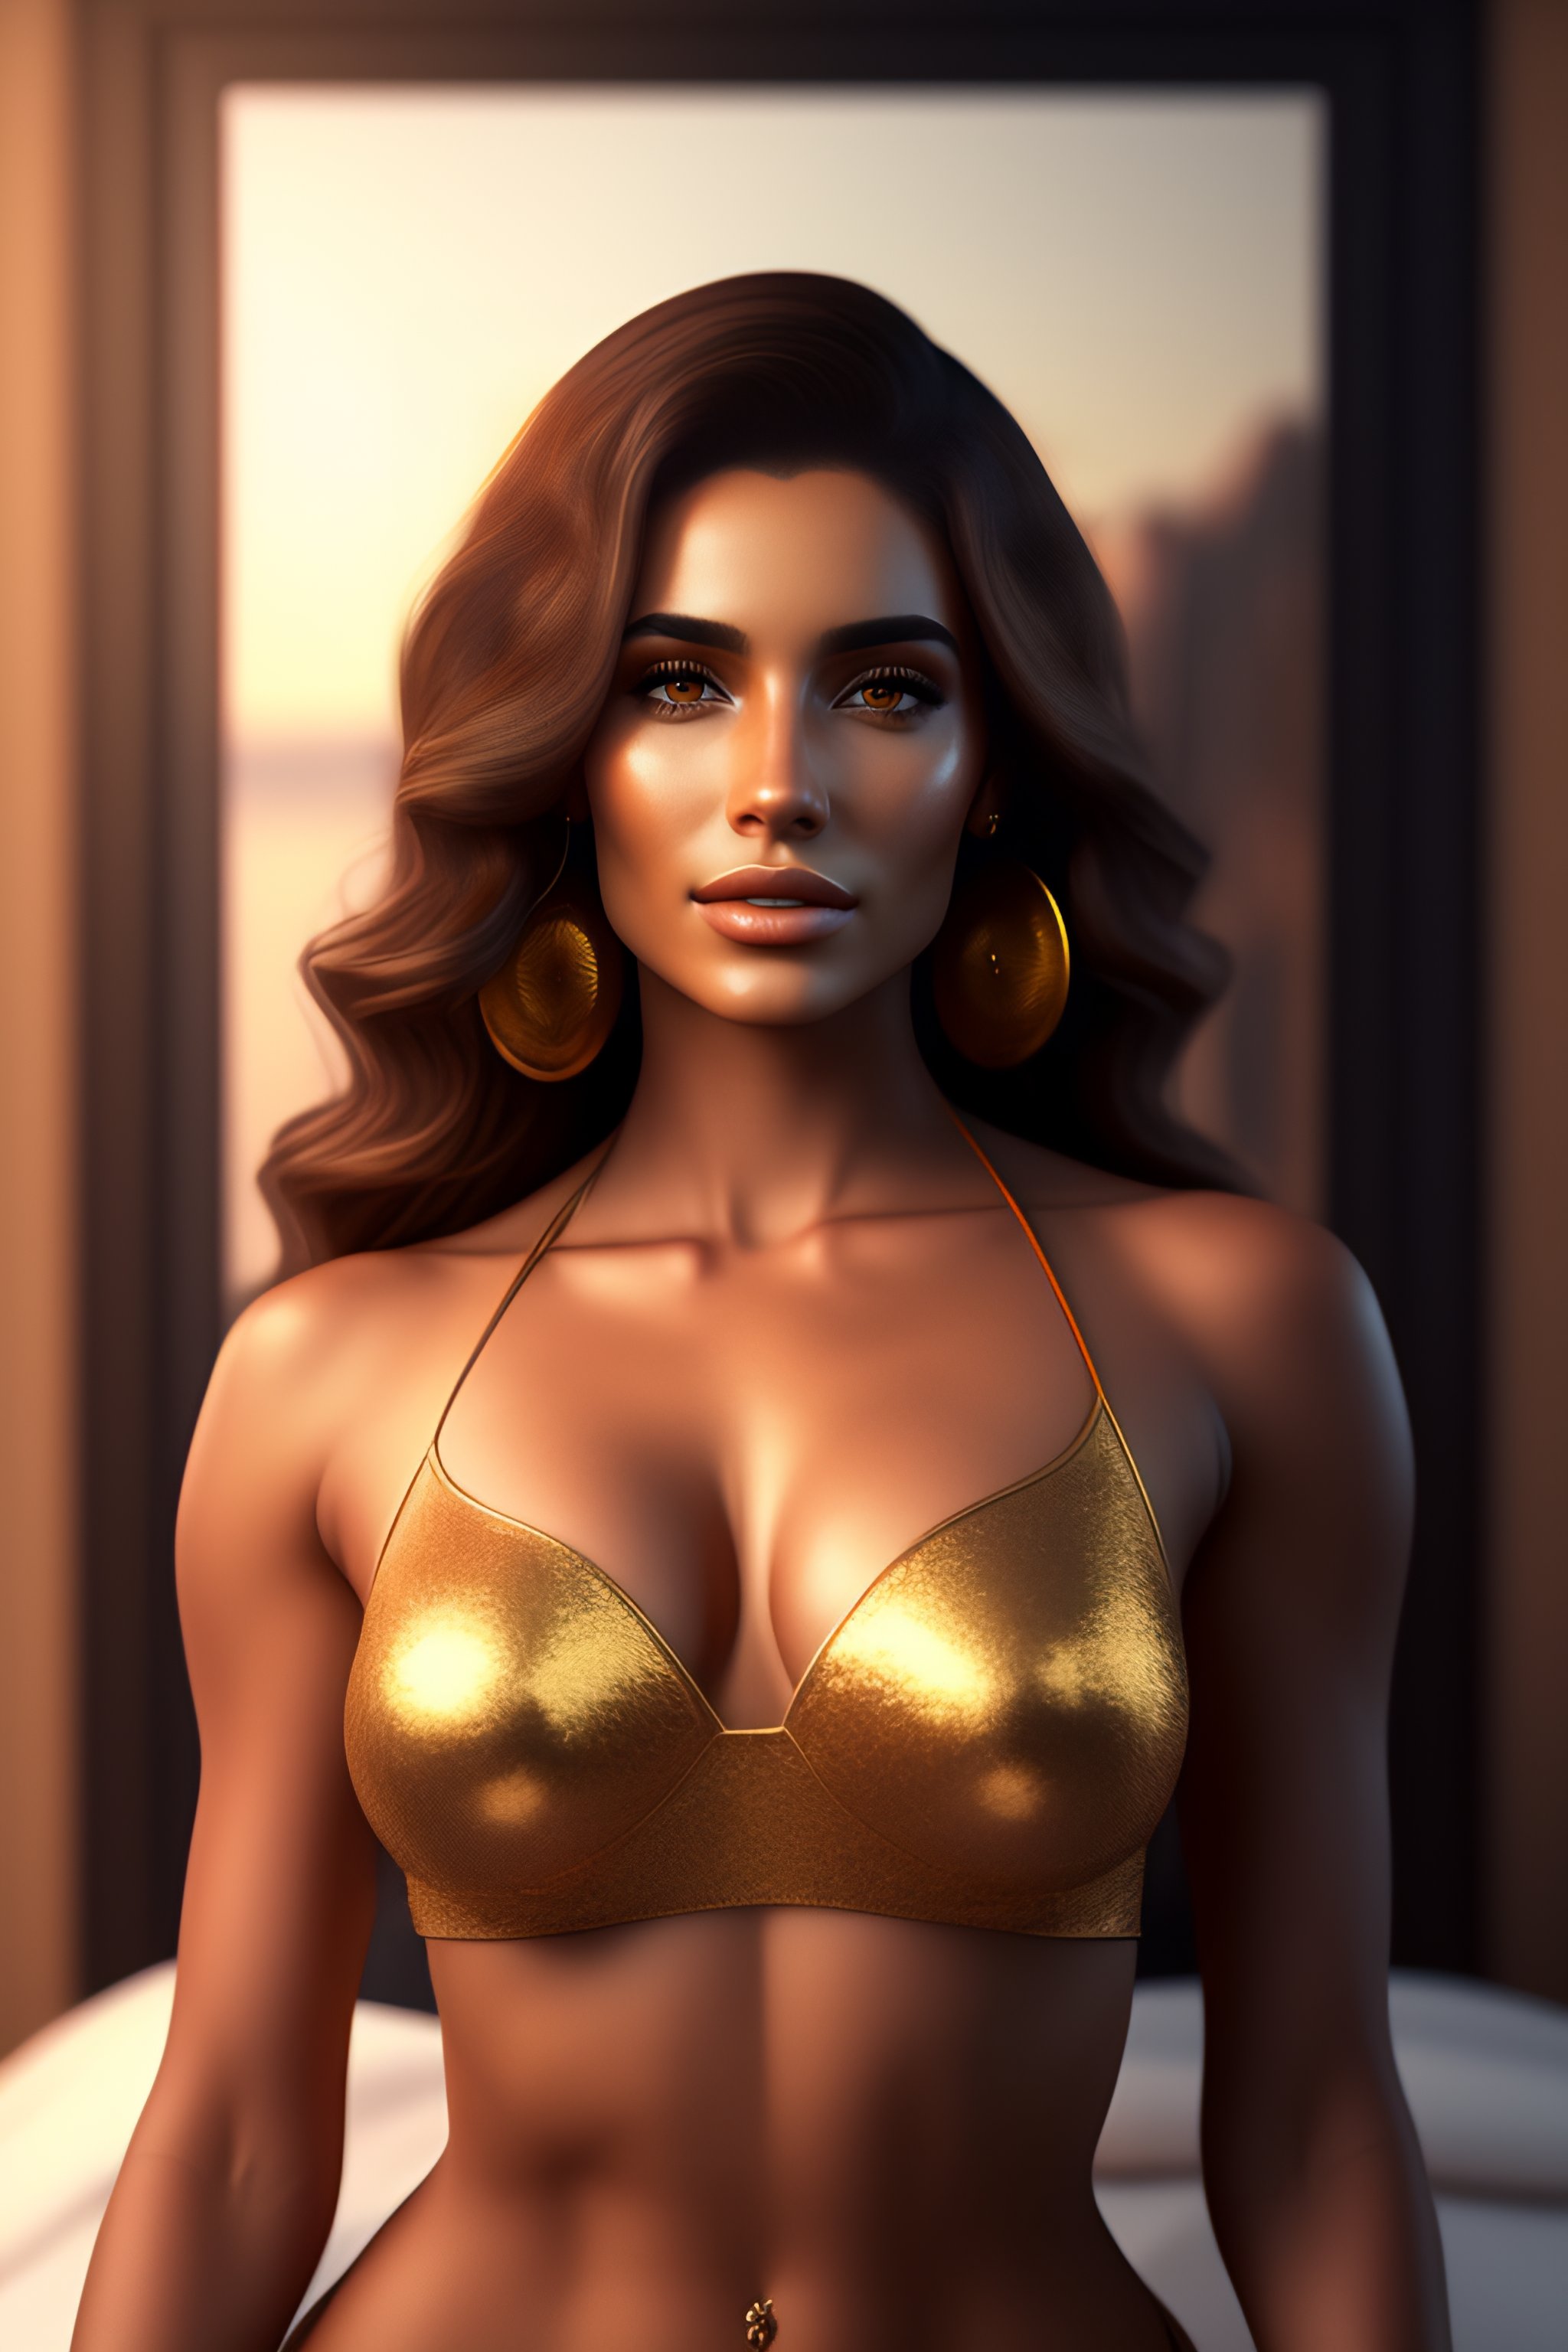 Lexica - Full body shot of super exquisite beautiful girl in intricate  pattern design golden bra,milky white skin body,golden ratio, digital  painting